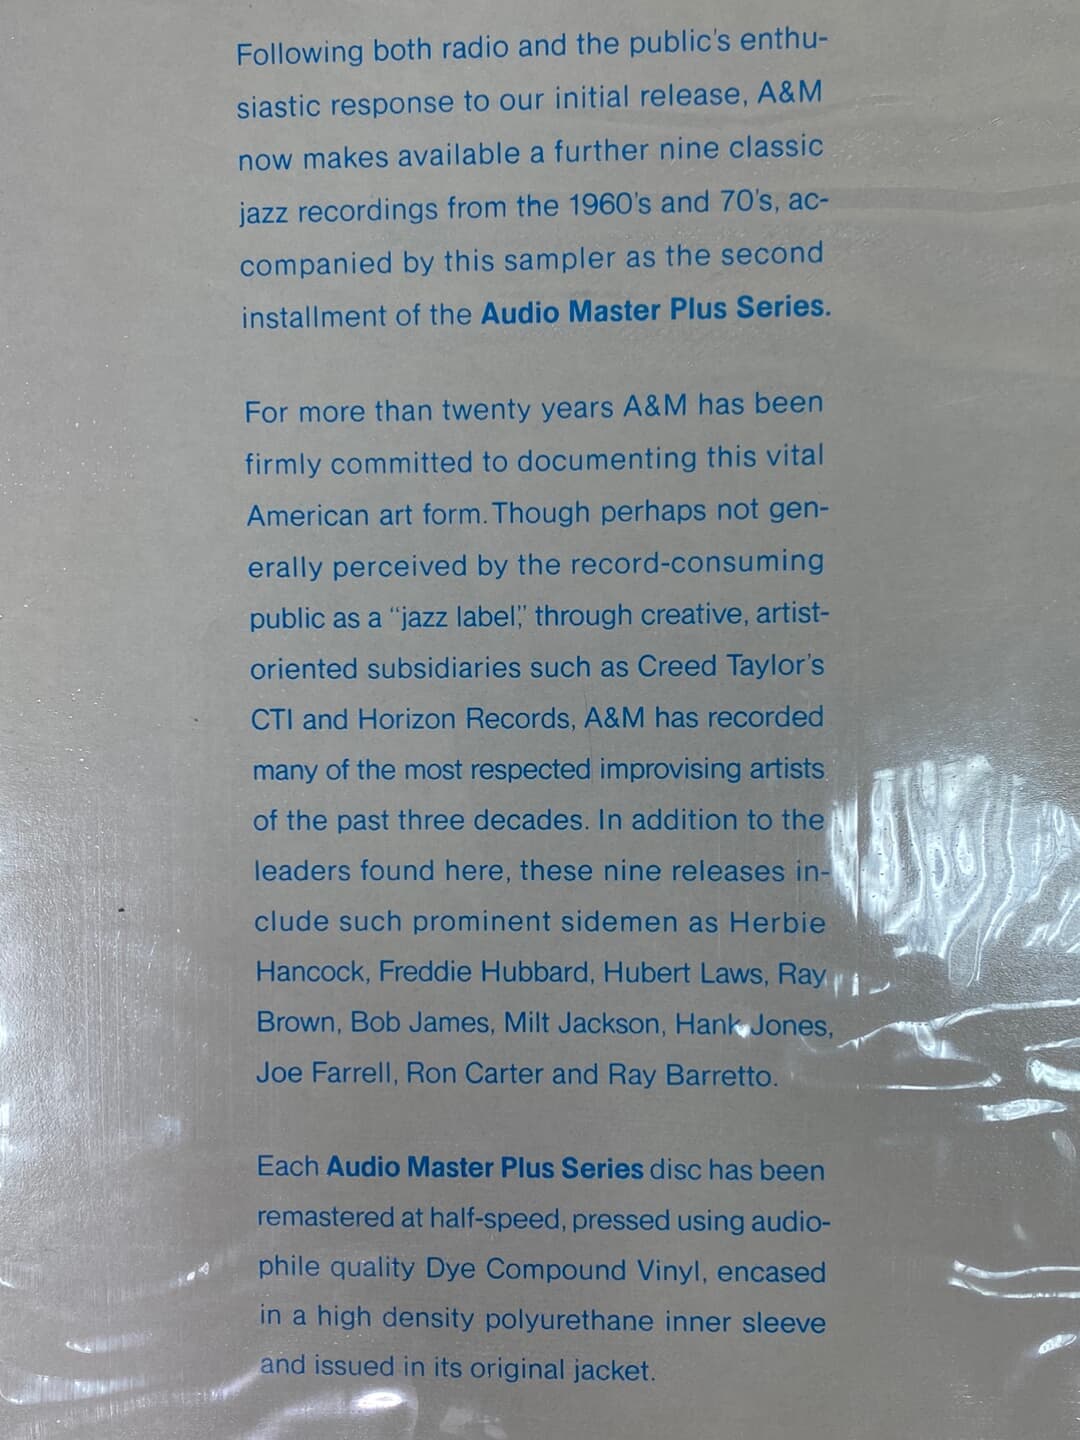 [LP] 오디오 마스터 플러스 시리즈 - Audio Master Plus Series Sampler Vol.2 LP [성음-라이센스반]